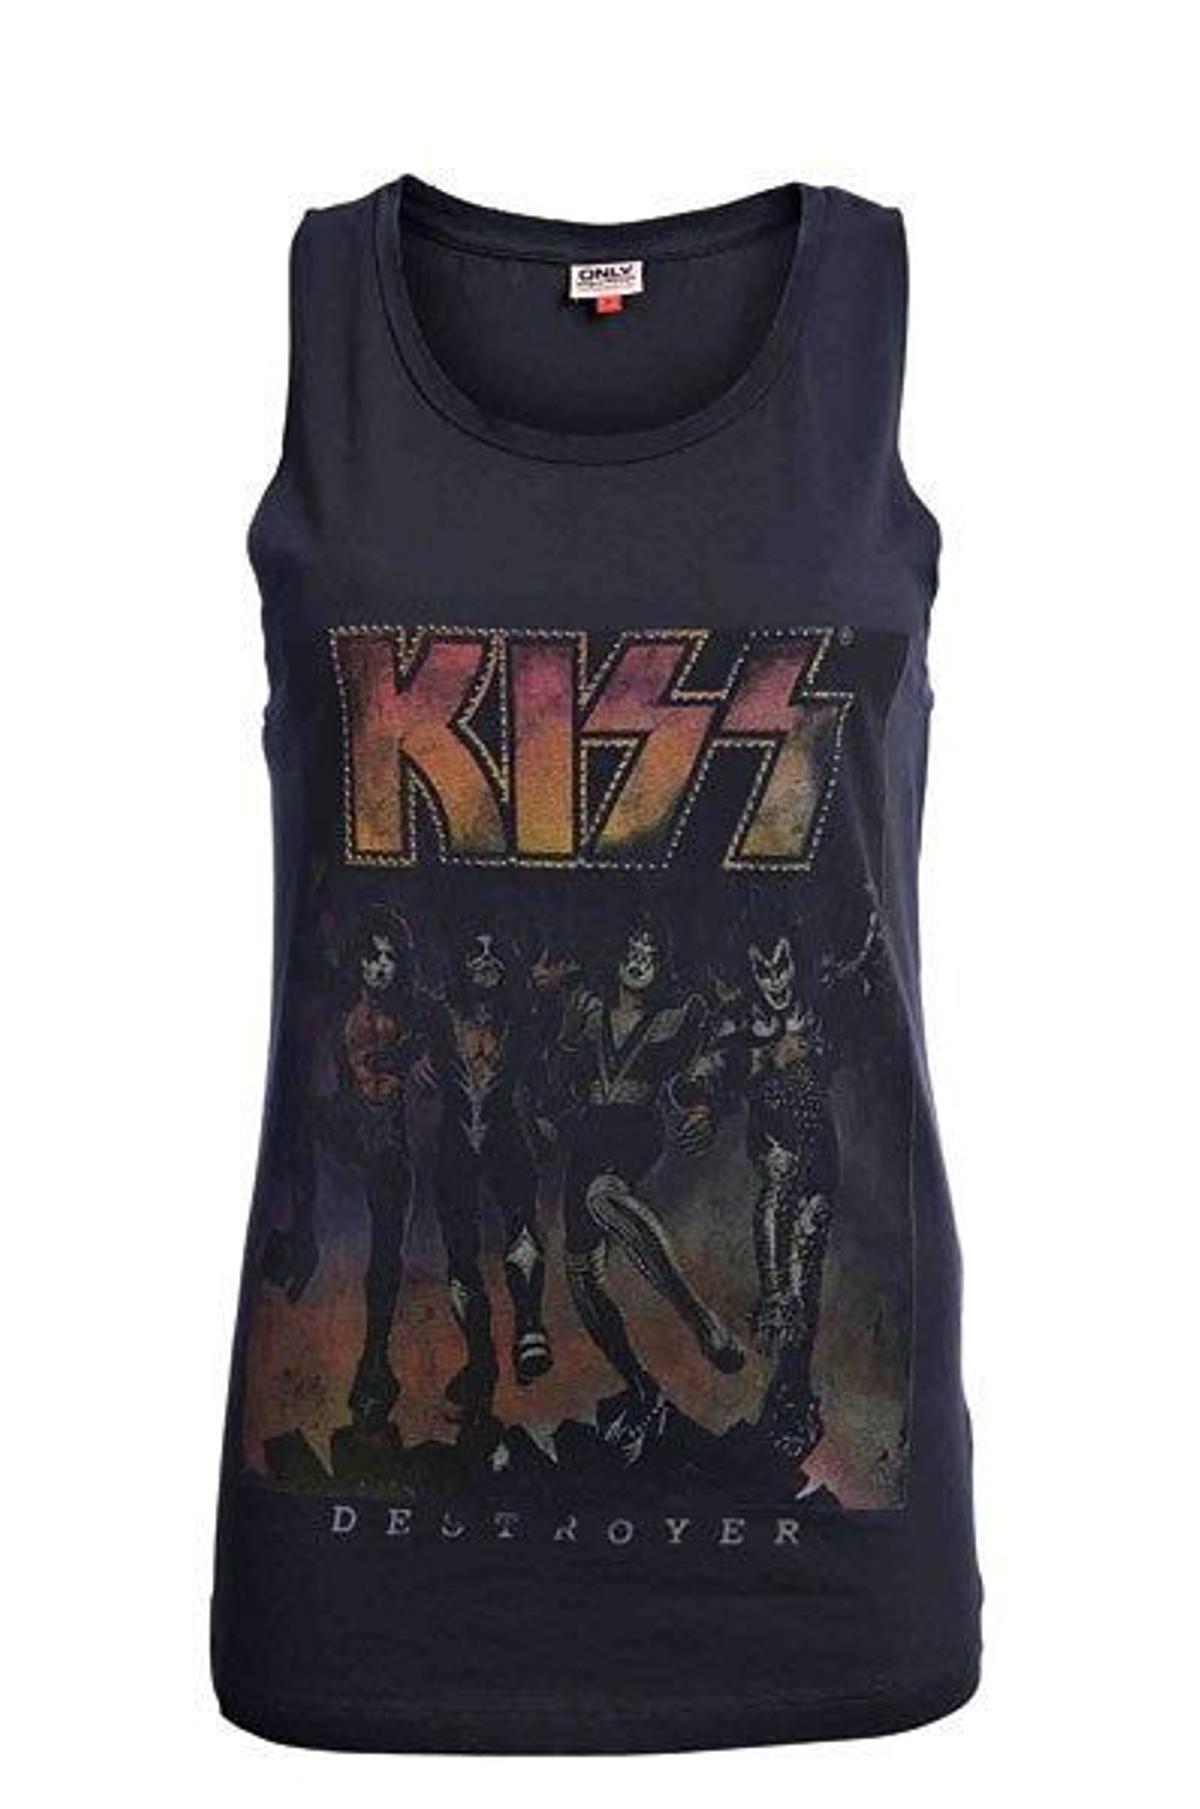 Camiseta de Kiss